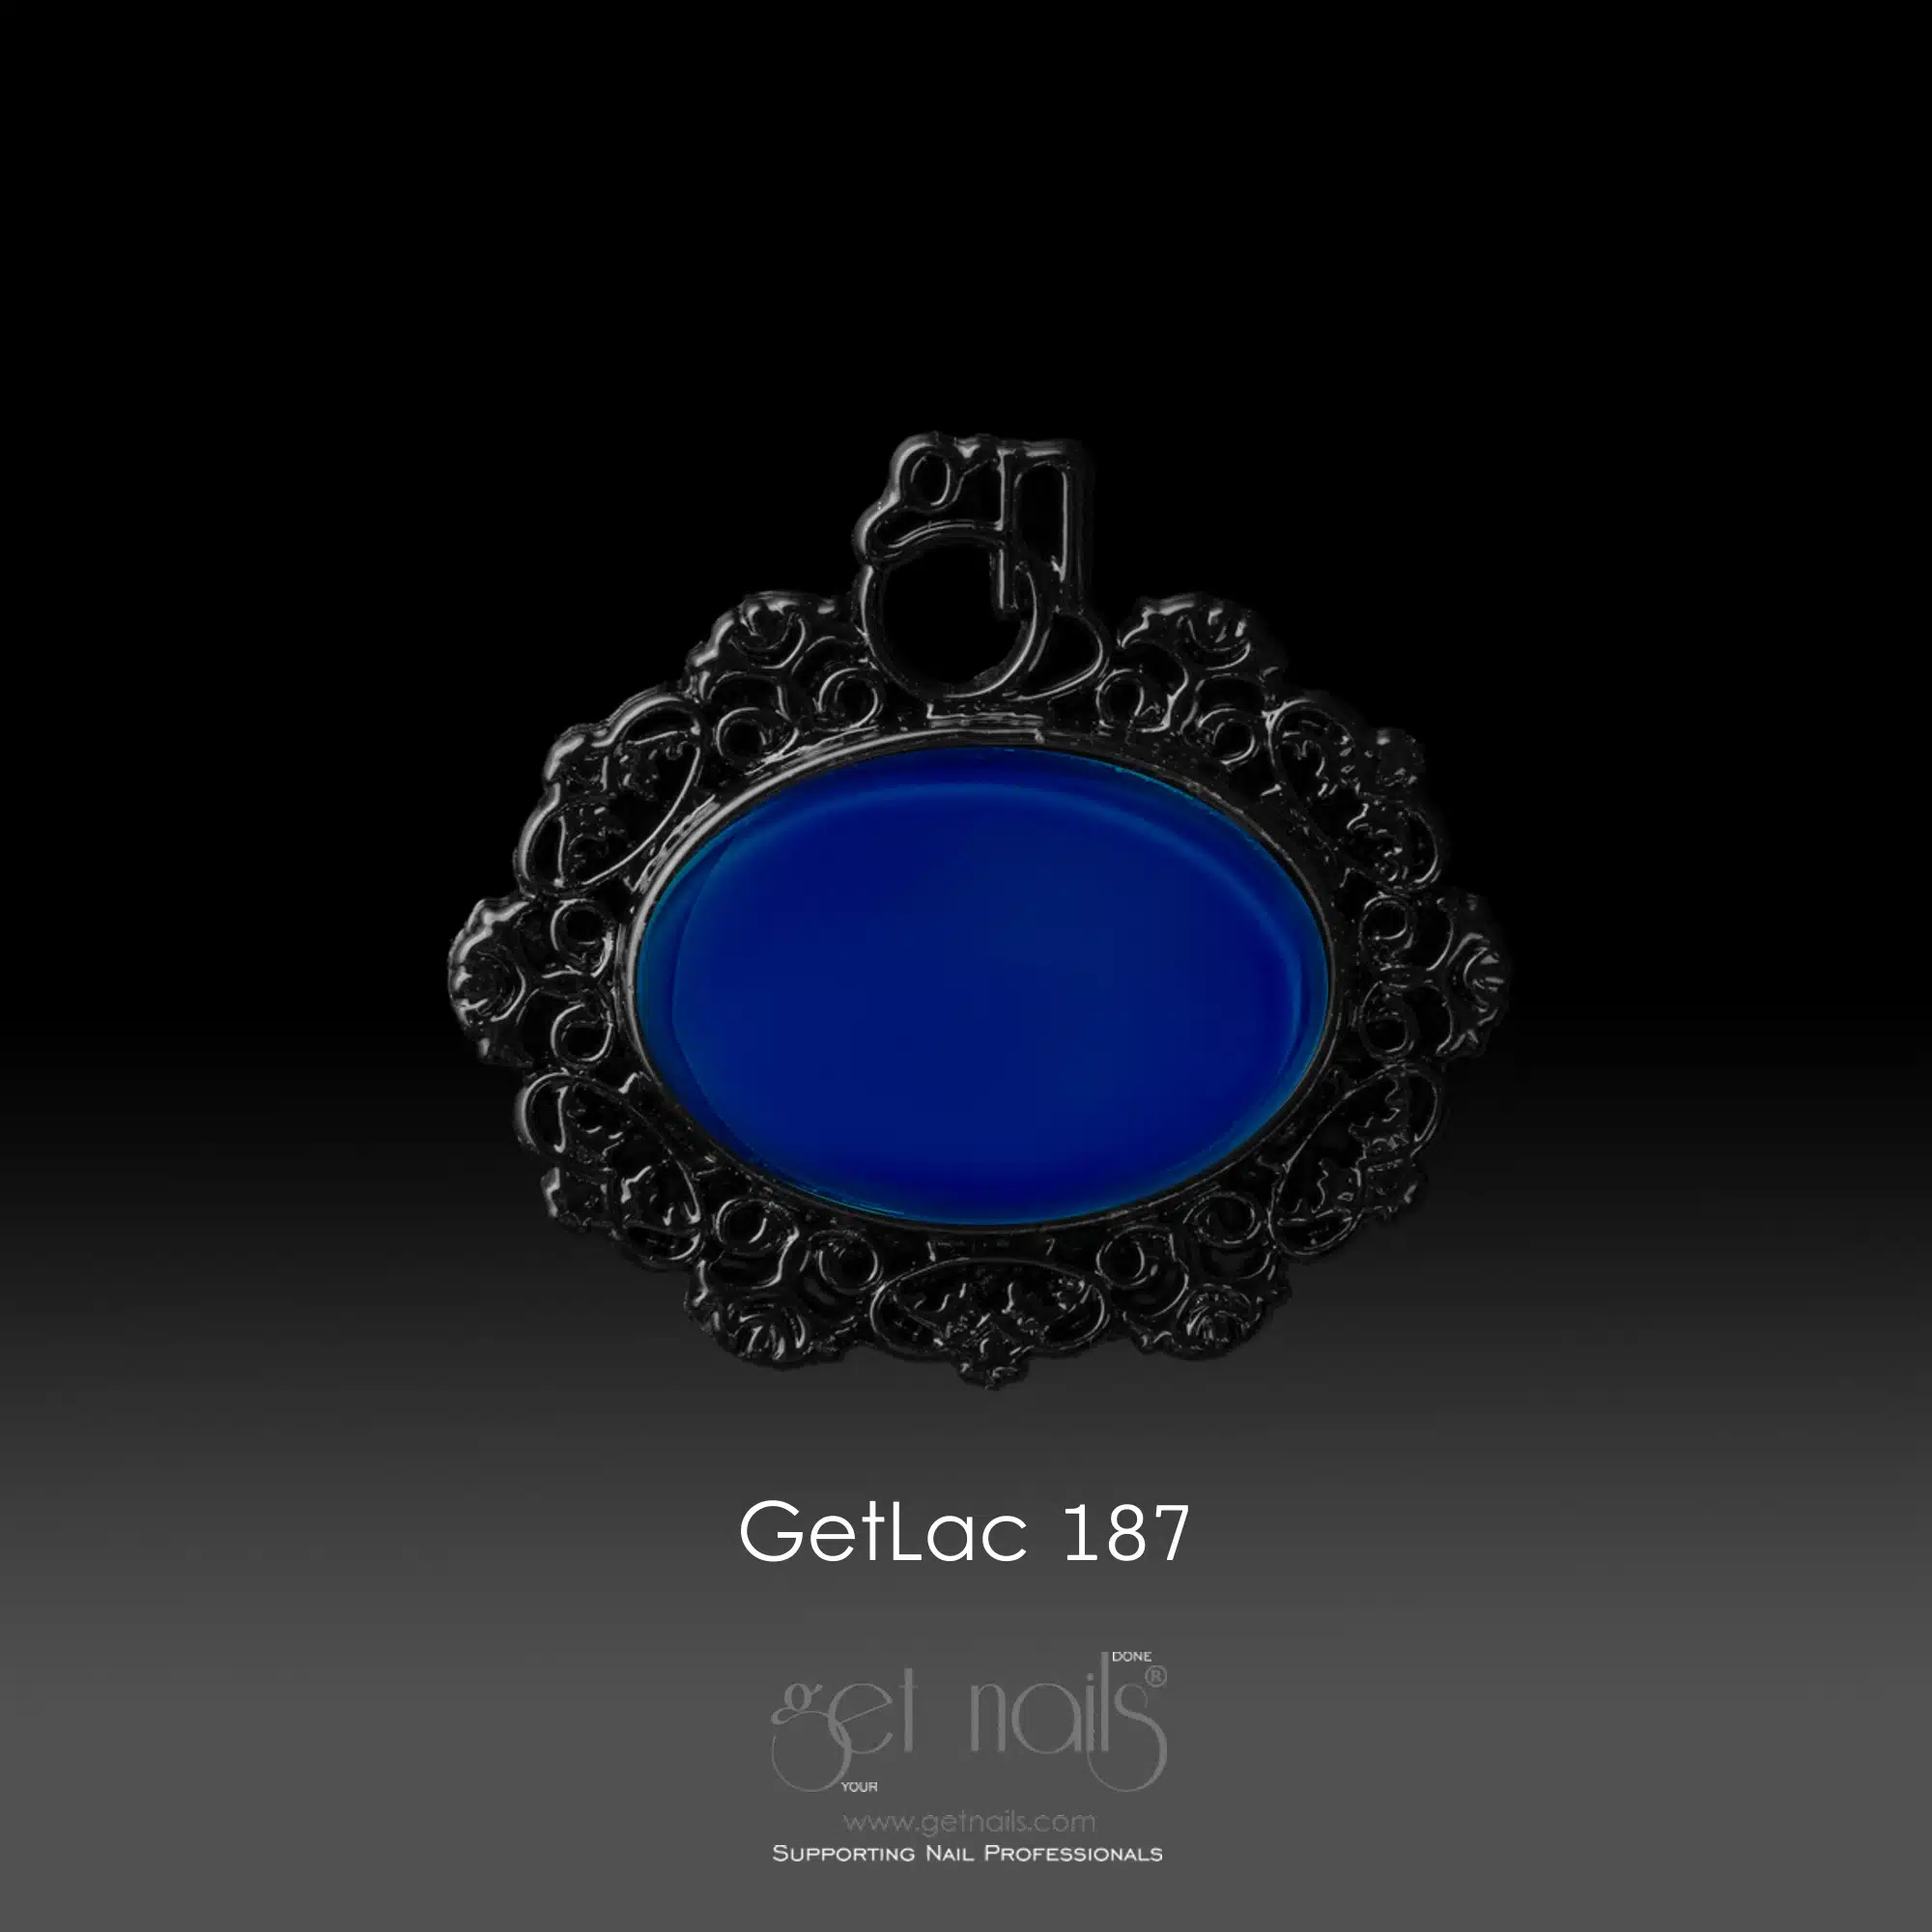 Get Nails Austria - GetLac 187 Brilliant Blue 15g